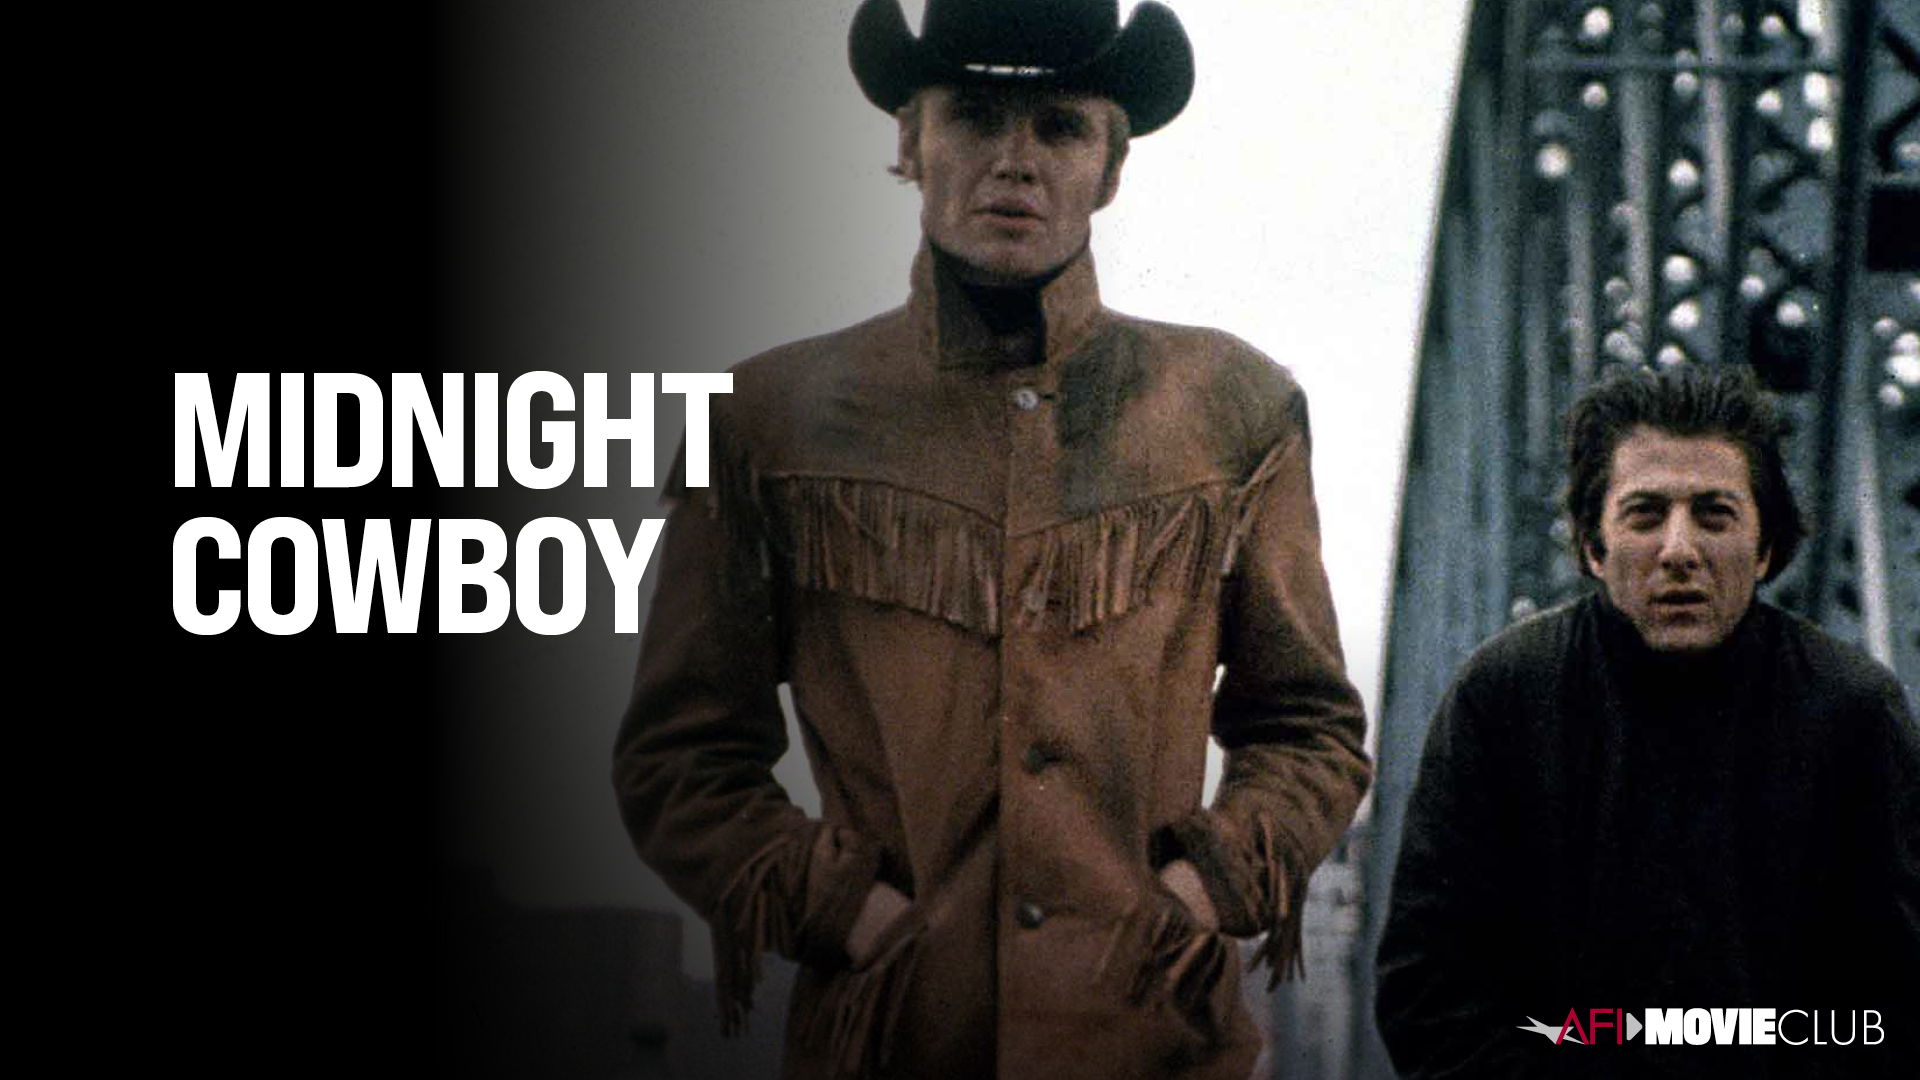 Midtnight Cowboy Film Still - Dustin Hoffman and Jon Voight